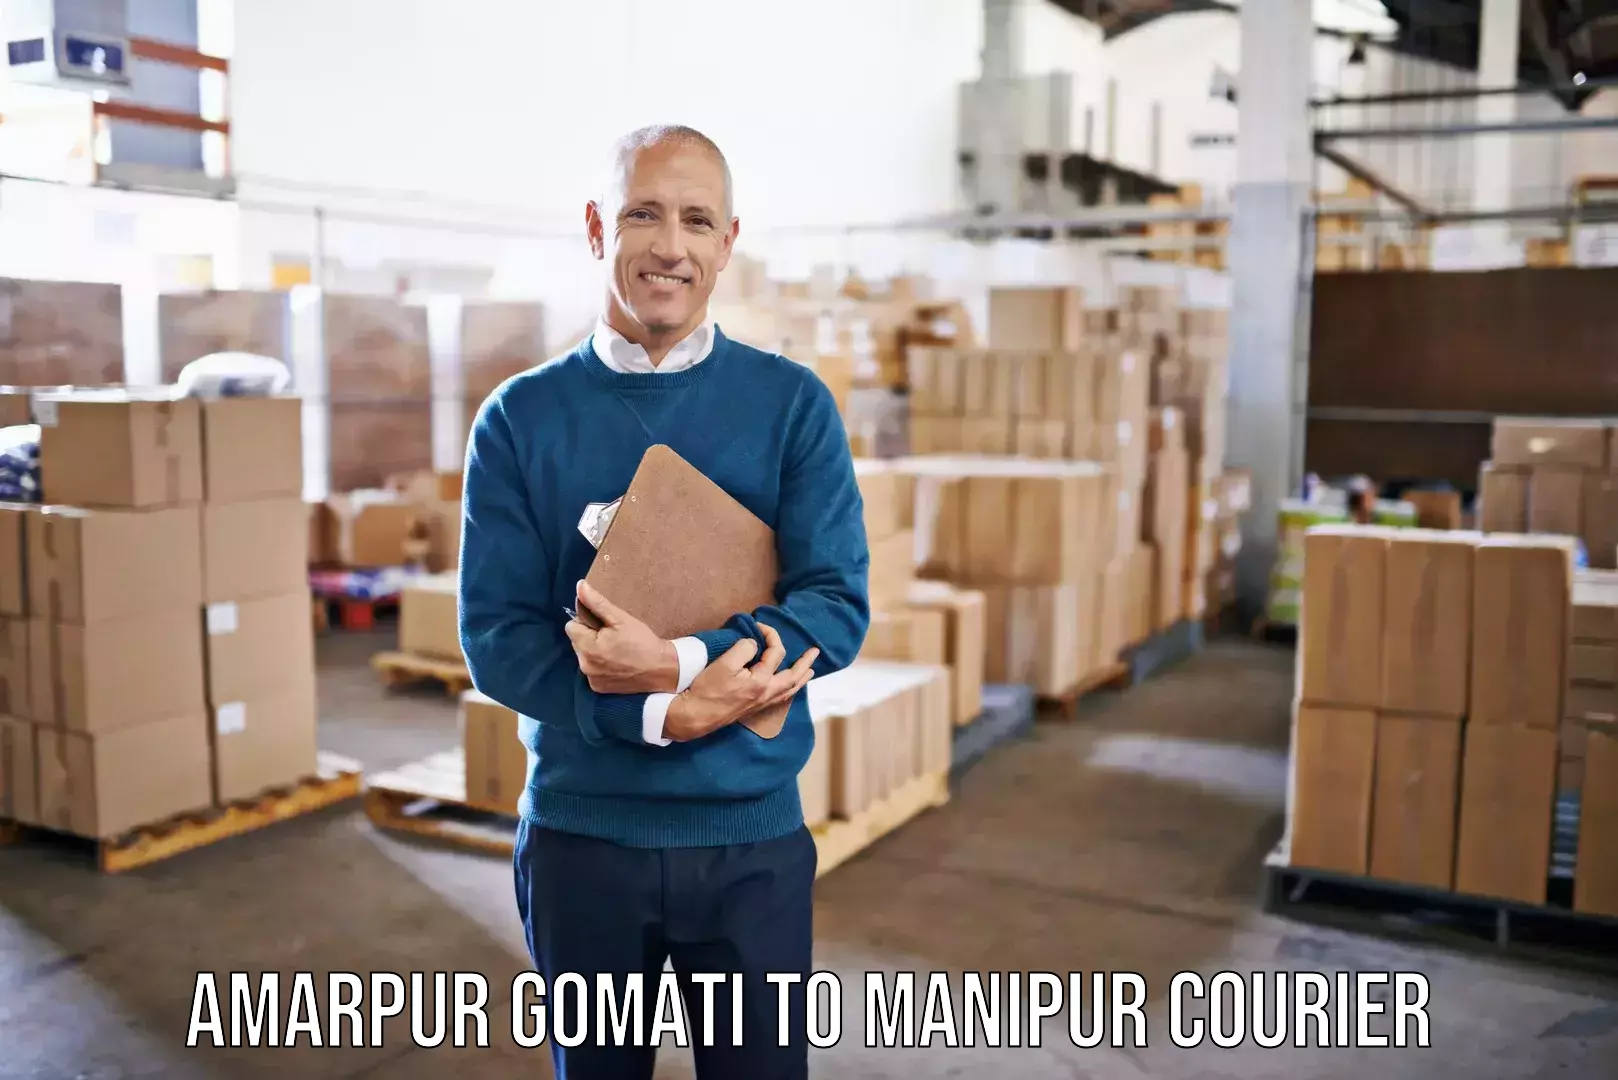 Professional movers Amarpur Gomati to Manipur